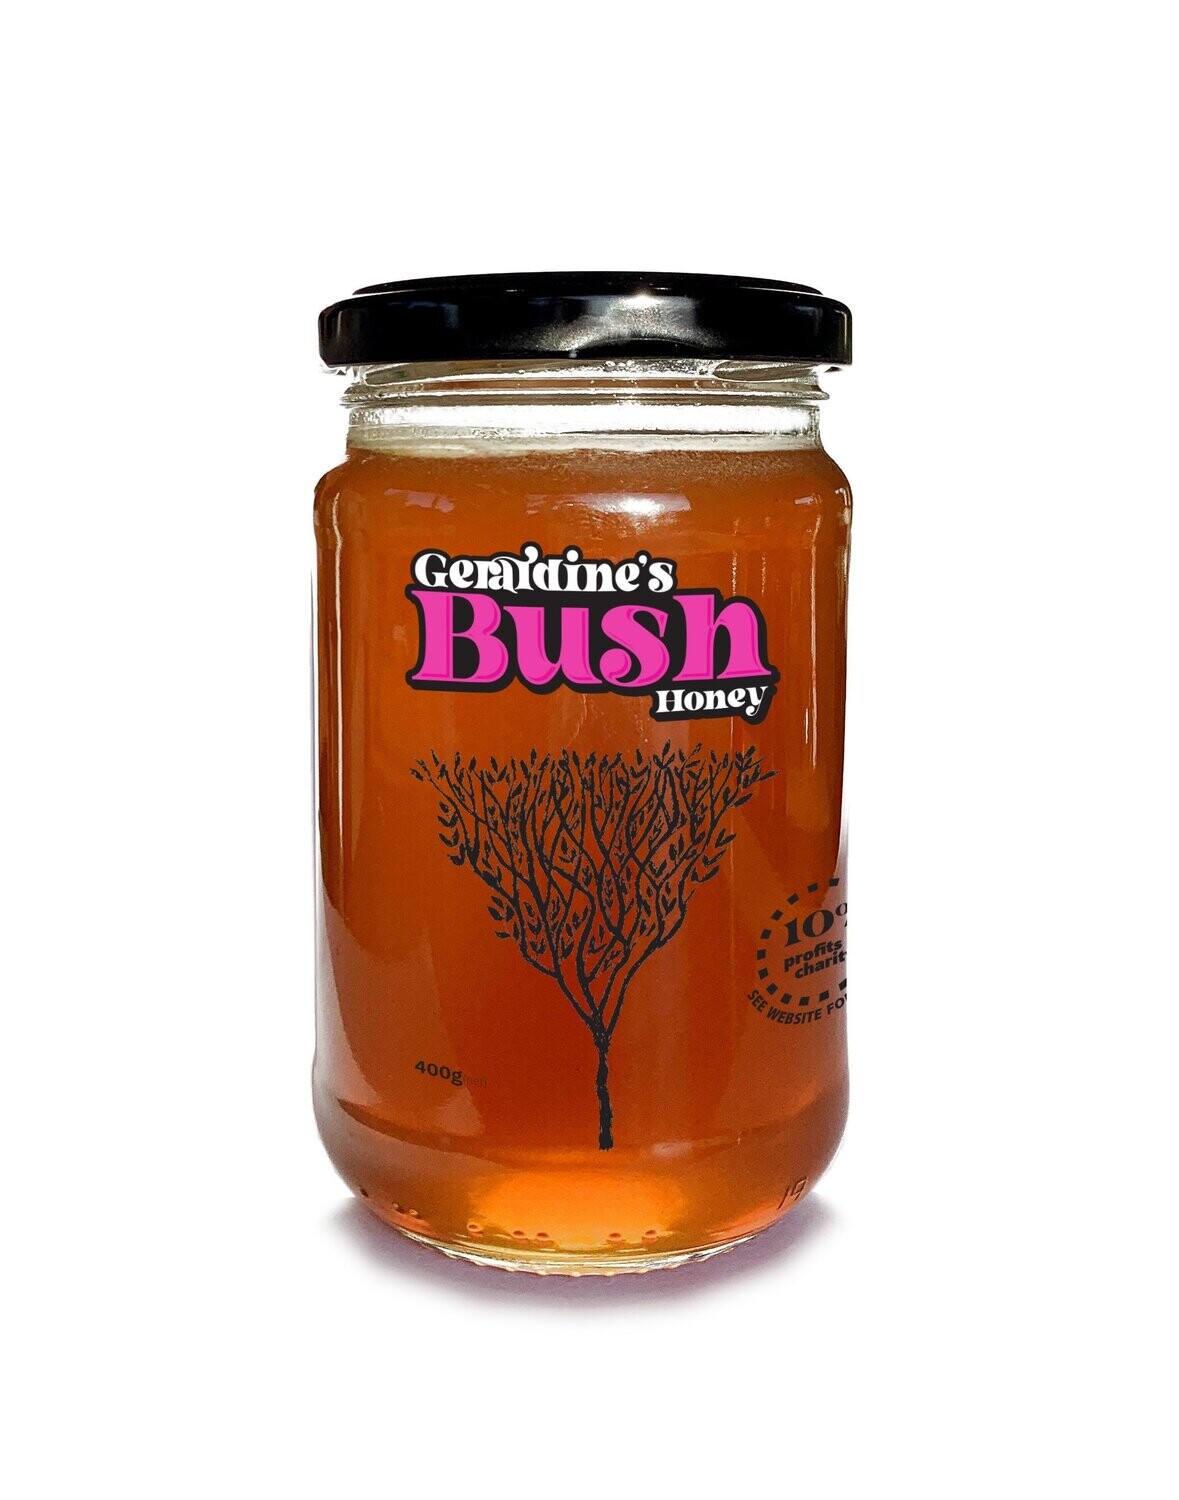 Geraldine's Bush Honey - Original